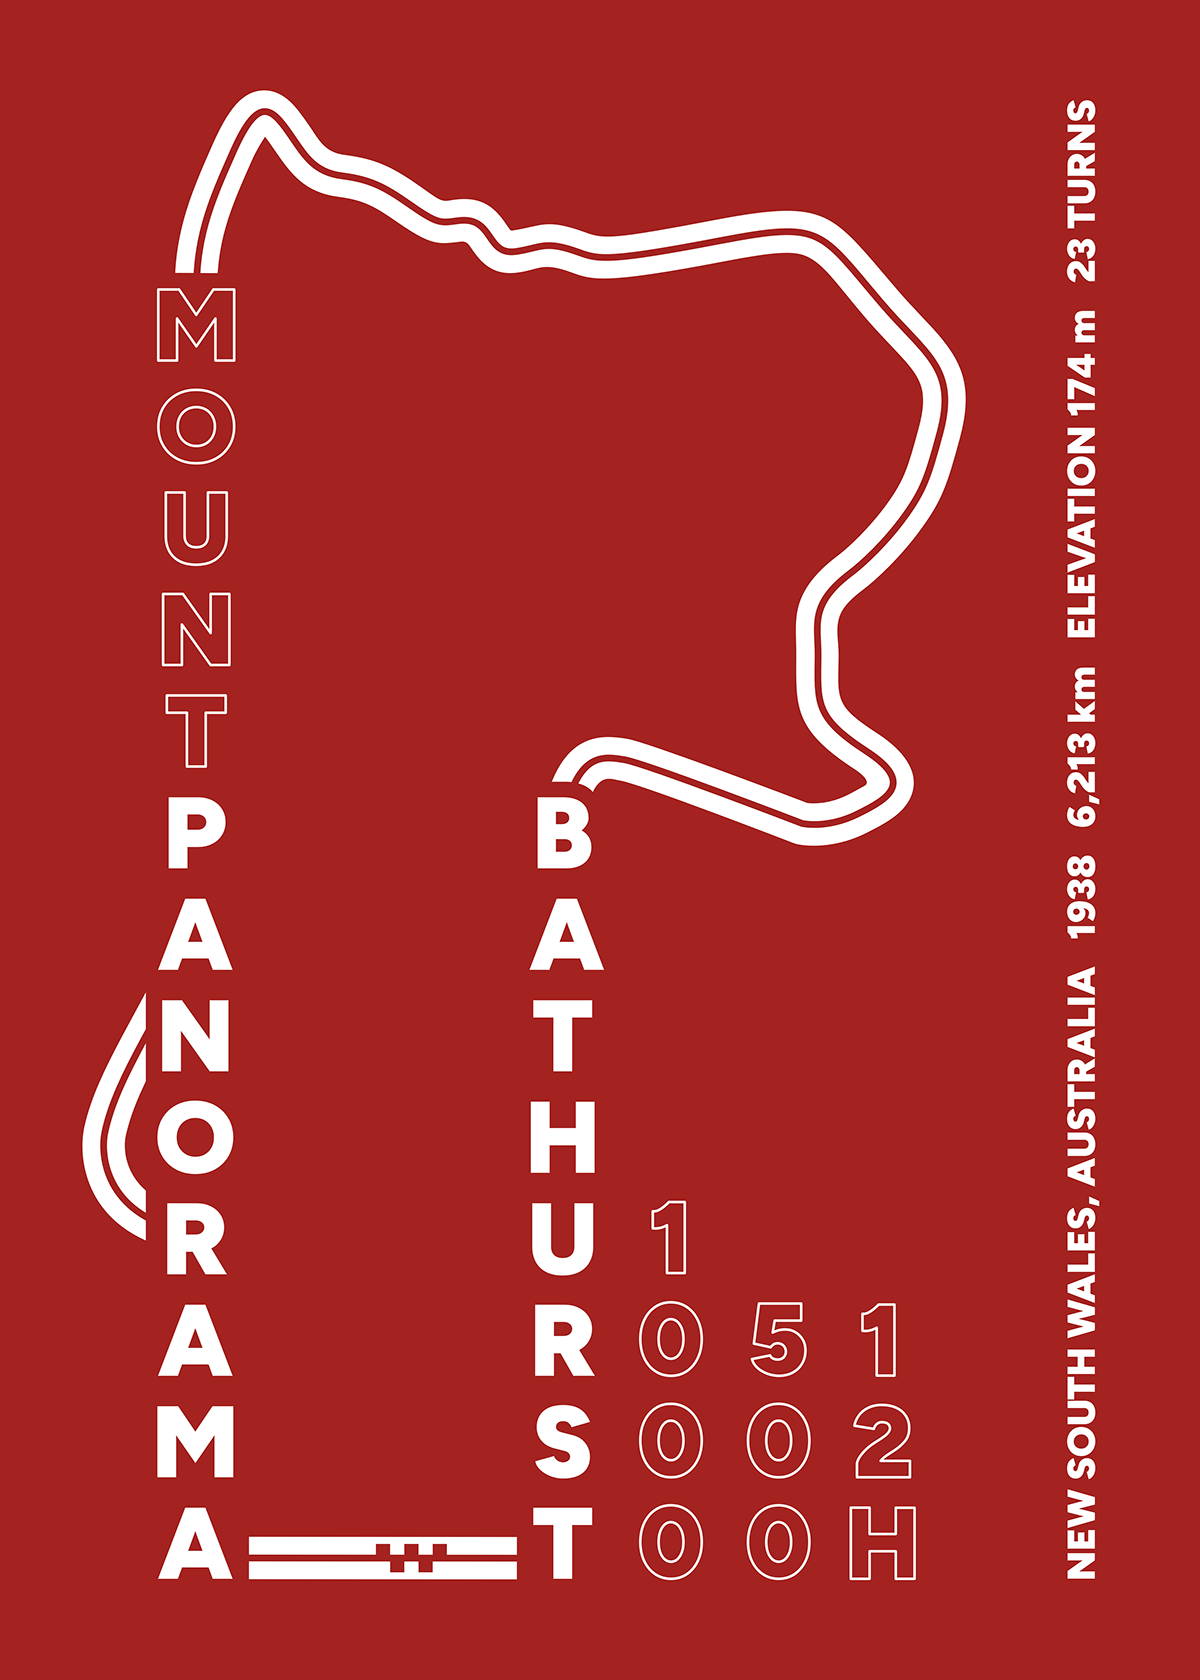 Australia V8 supercars poster t-shirt Motor racing race track Racing Motorsport Bathurst mount panorama